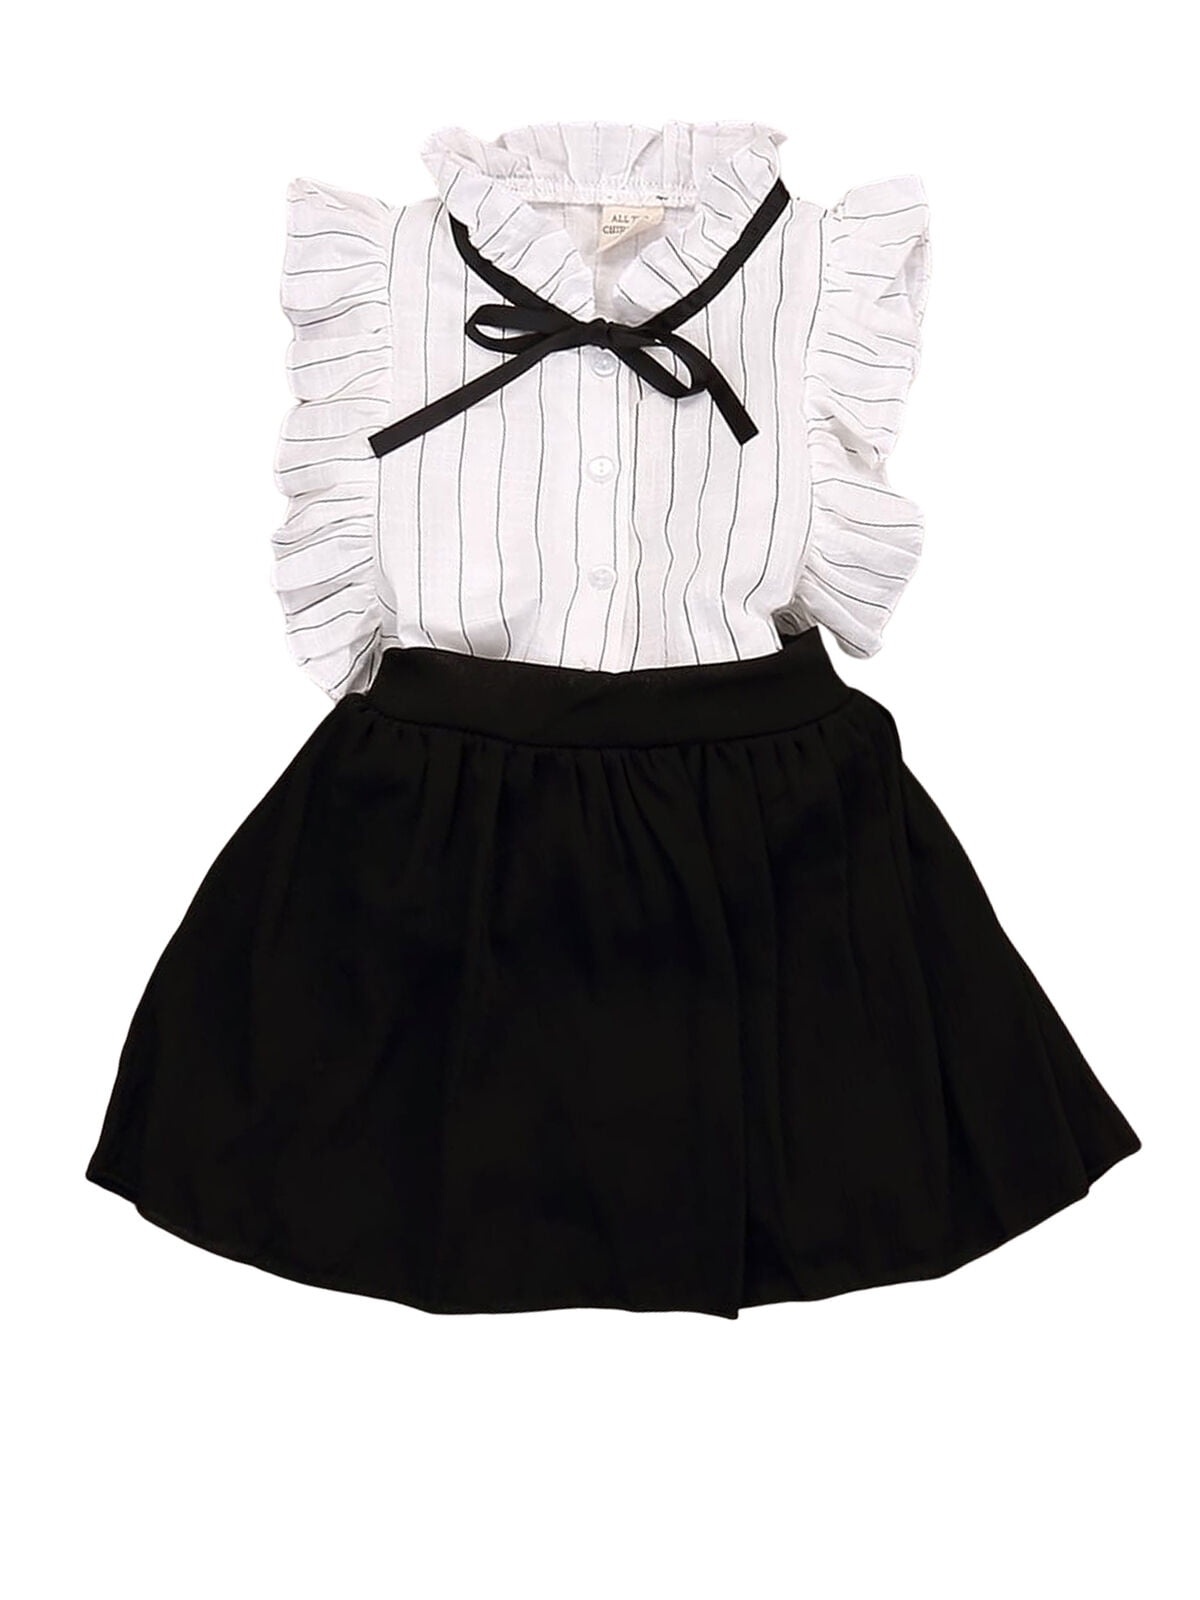 Toddler Baby Girls Clothes T-shirt Tops+Tutu Skirt Dress Outfits 2PCS Set 2-7T 